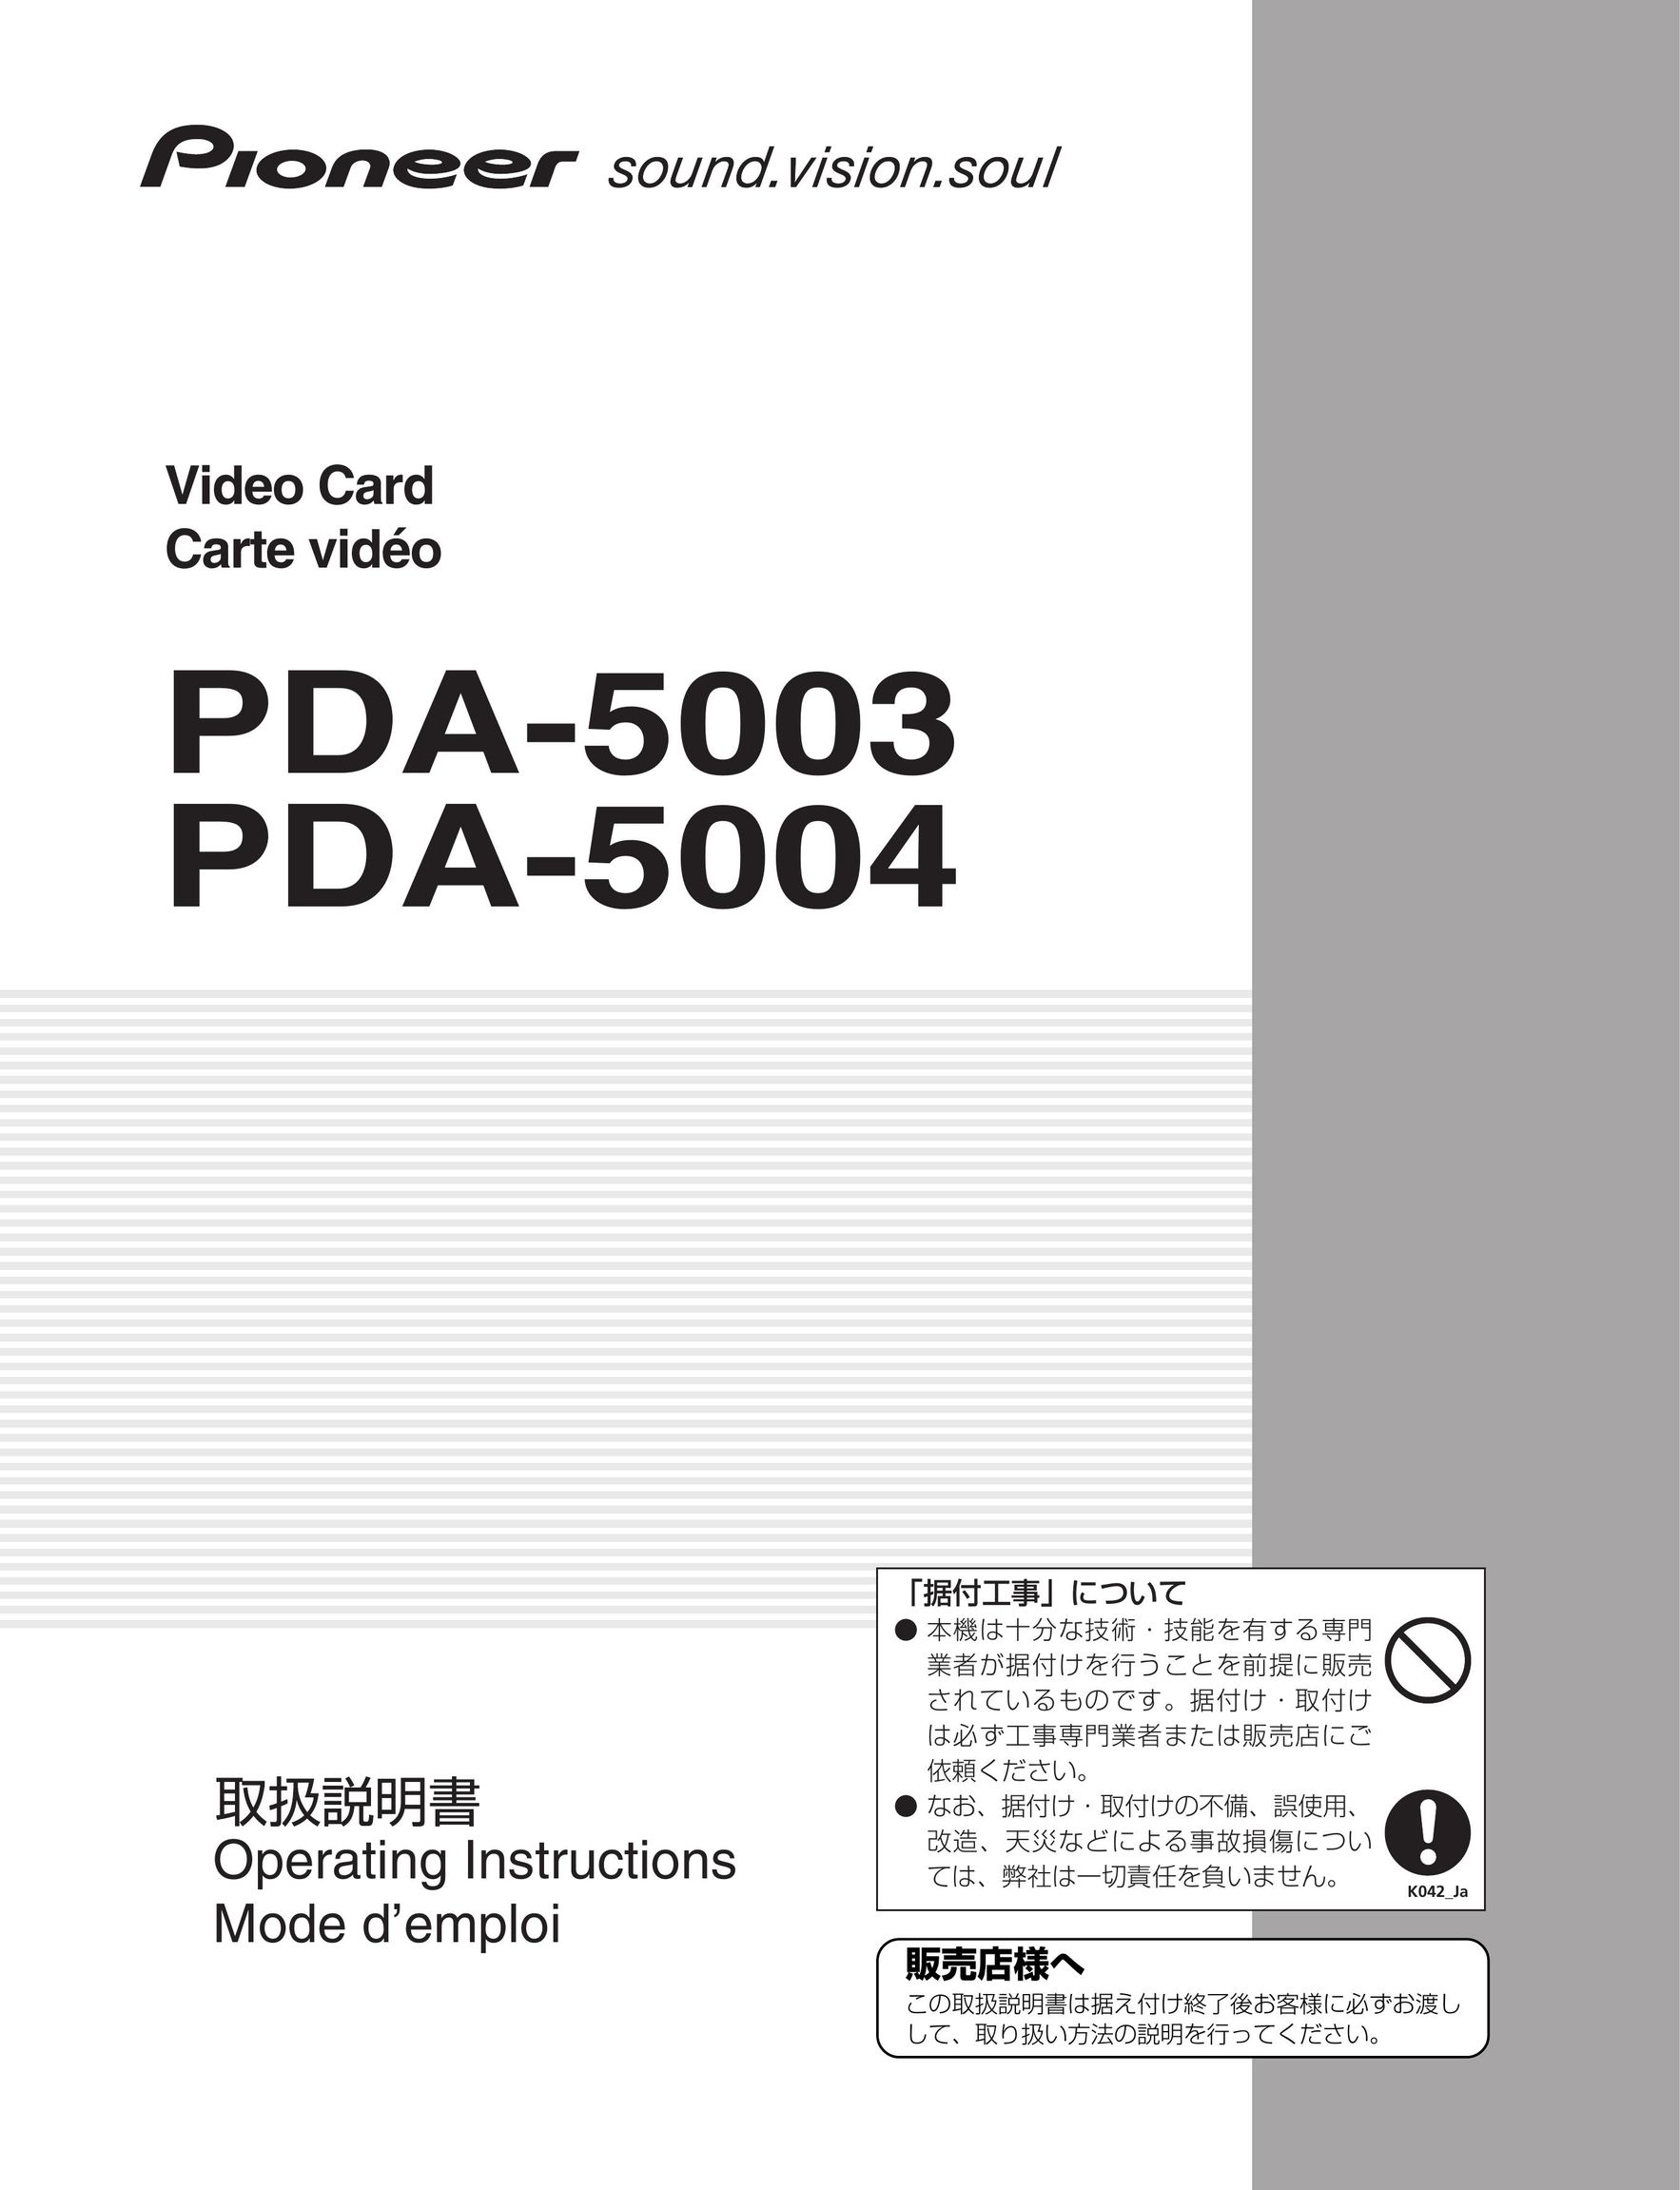 Pioneer PDA-5004 Computer Hardware User Manual